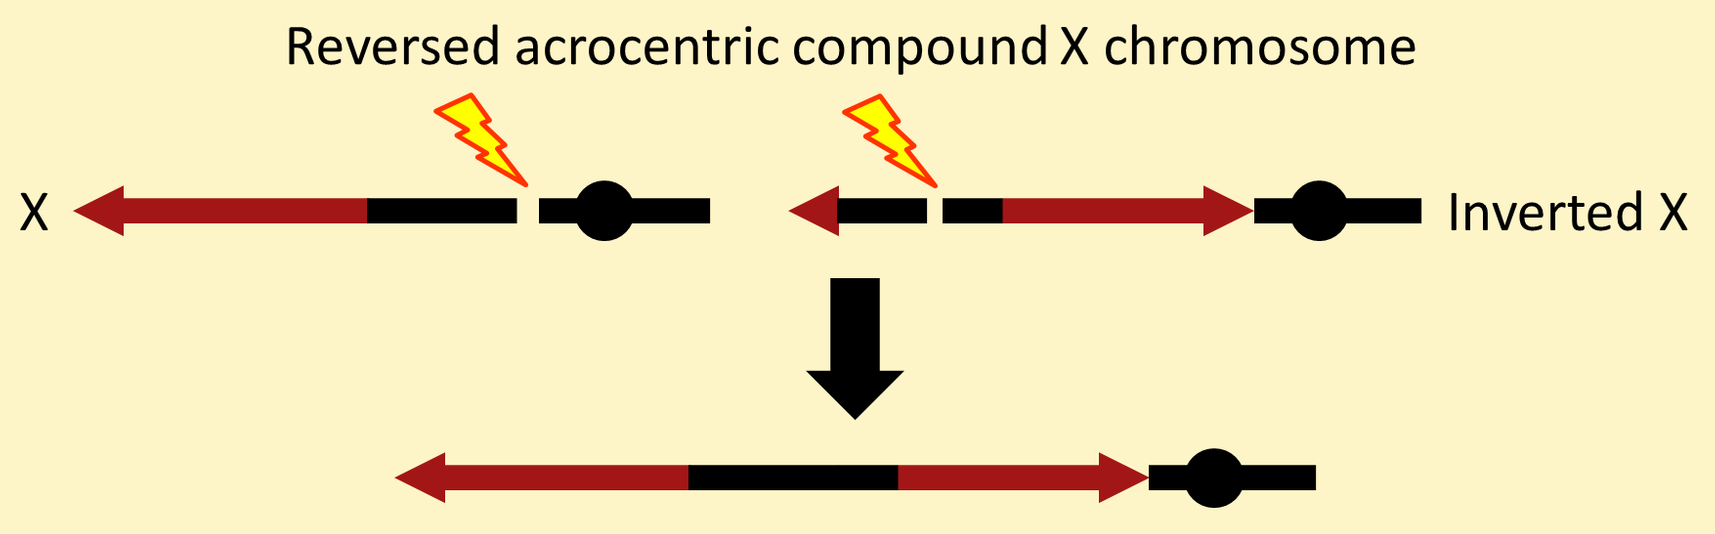 Reversed acrocentric compound X chromosome